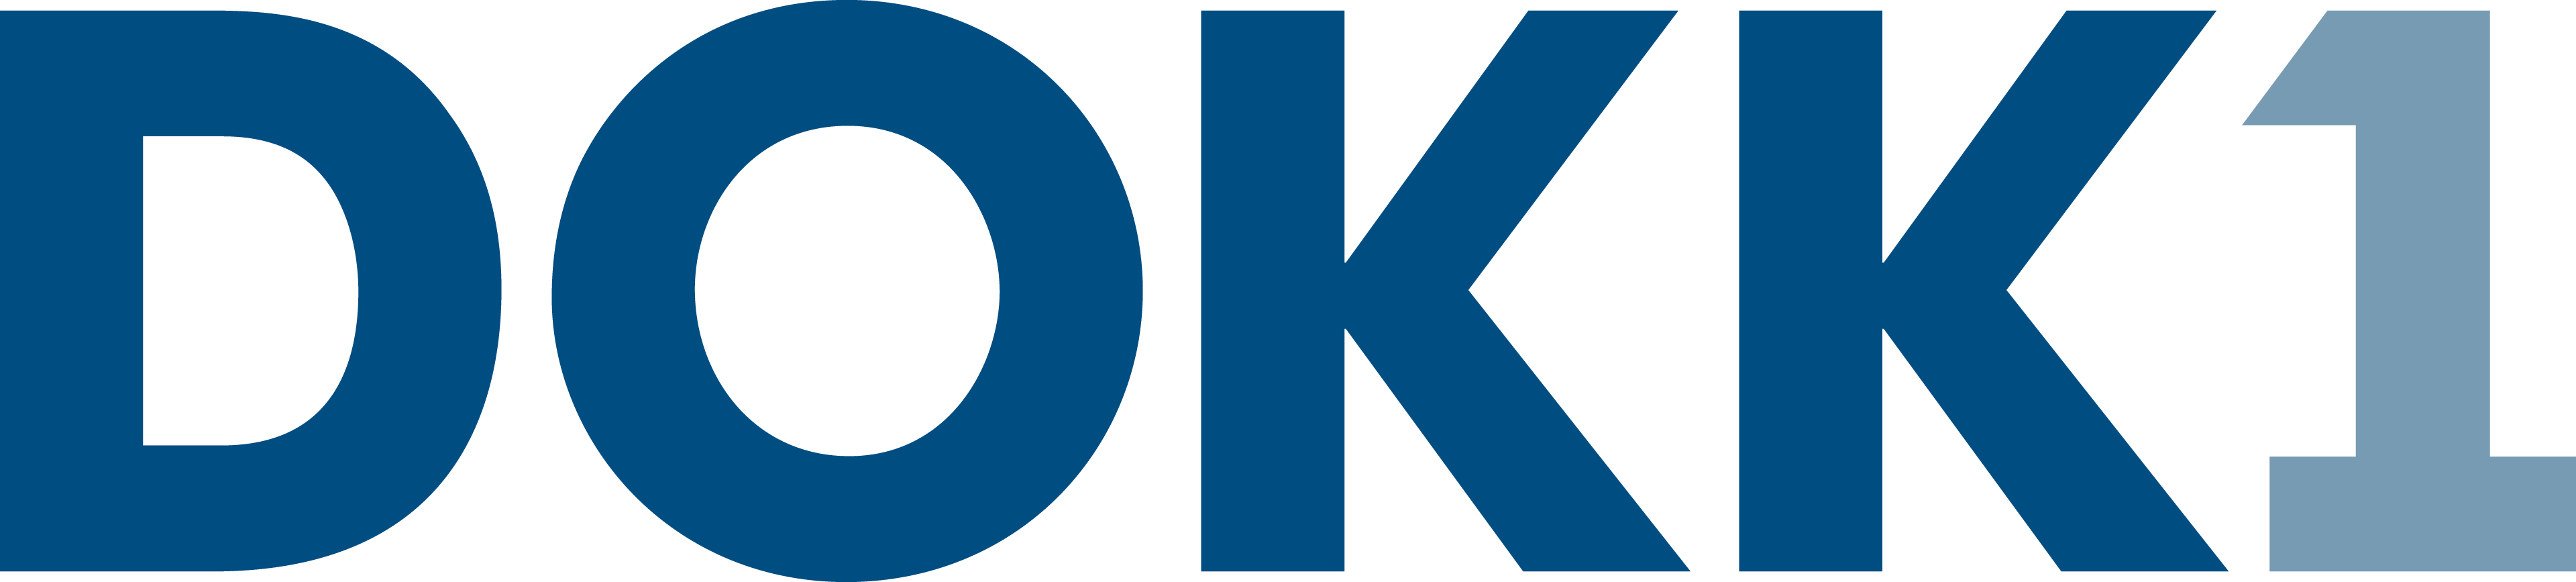 DOKK1_logo_blue_3840x867px